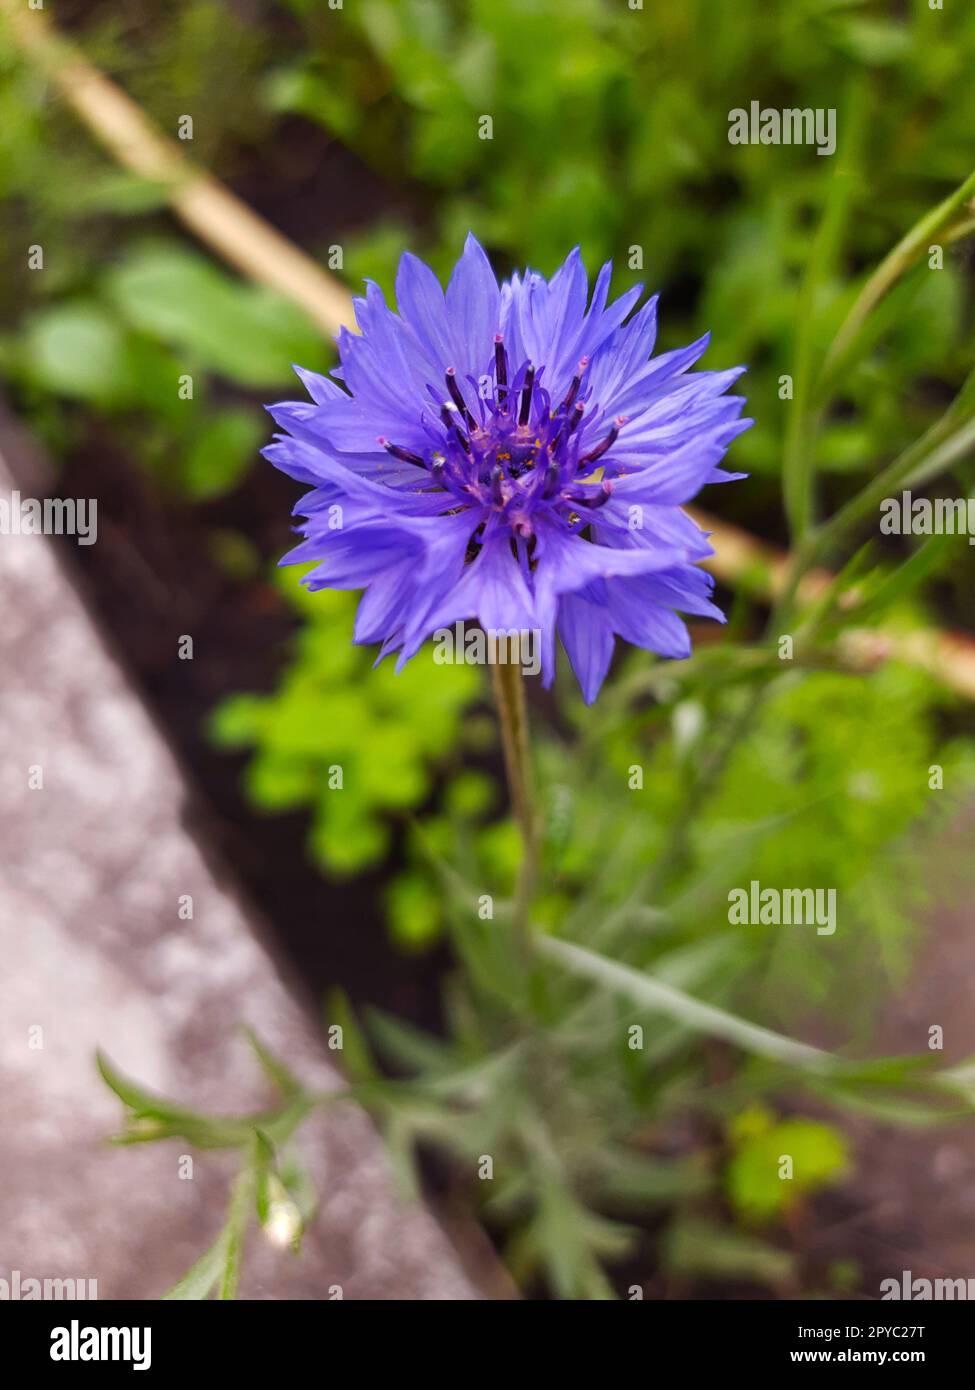 Blue cornflower flower close up Stock Photo